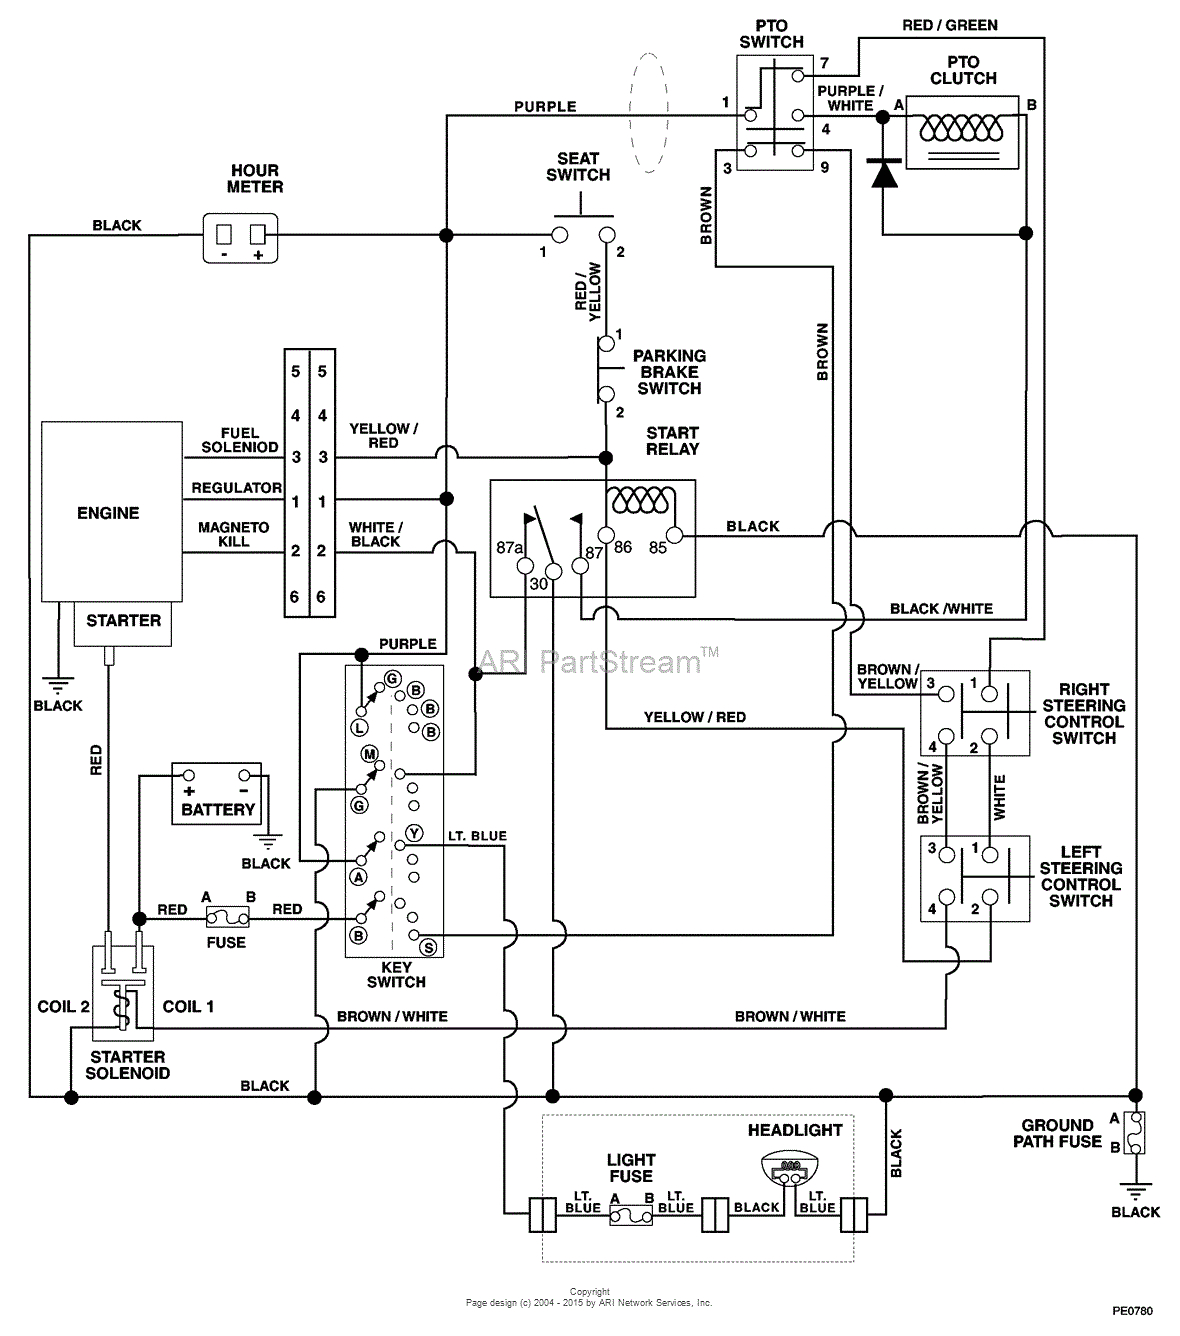 wiring diagram for crafts wiring diagram schema wiring diagram for craftsman lt1000 lawn tractor wiring diagram for crafts